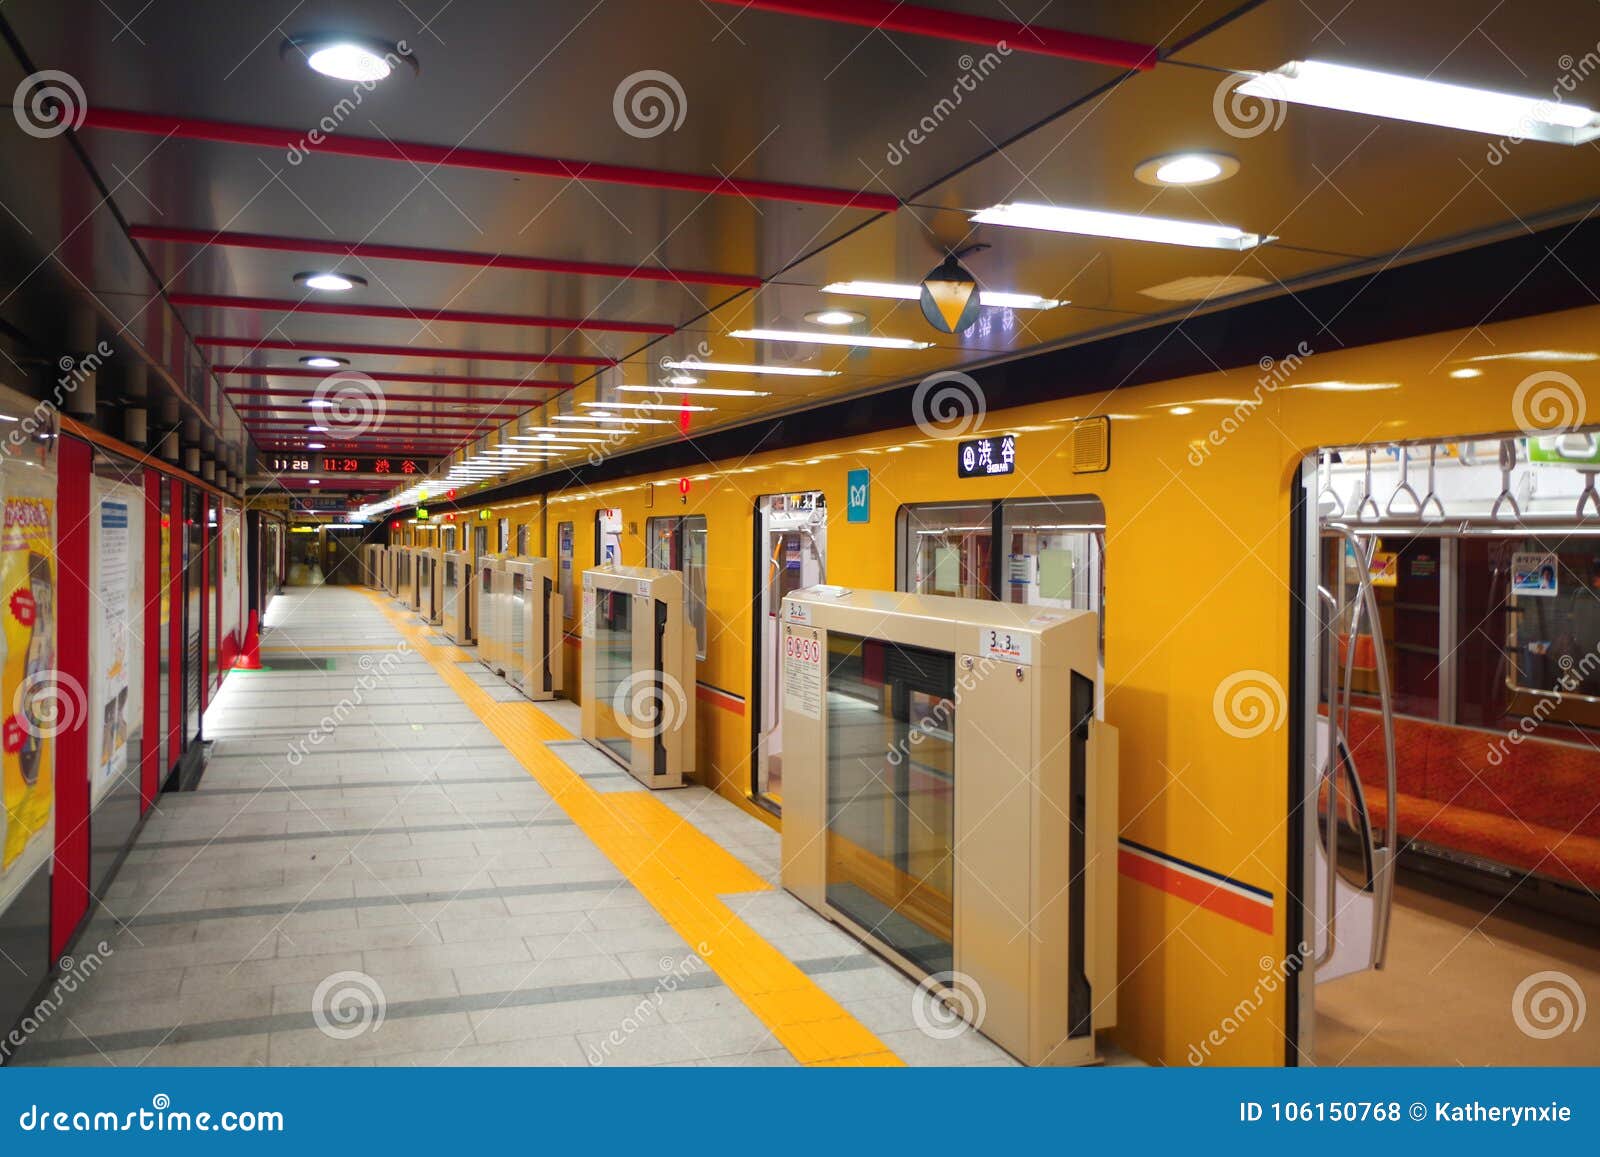 Tokyo Metro Train In Asakusa Station Editorial Stock Photo Image Of Appearance Buddhist